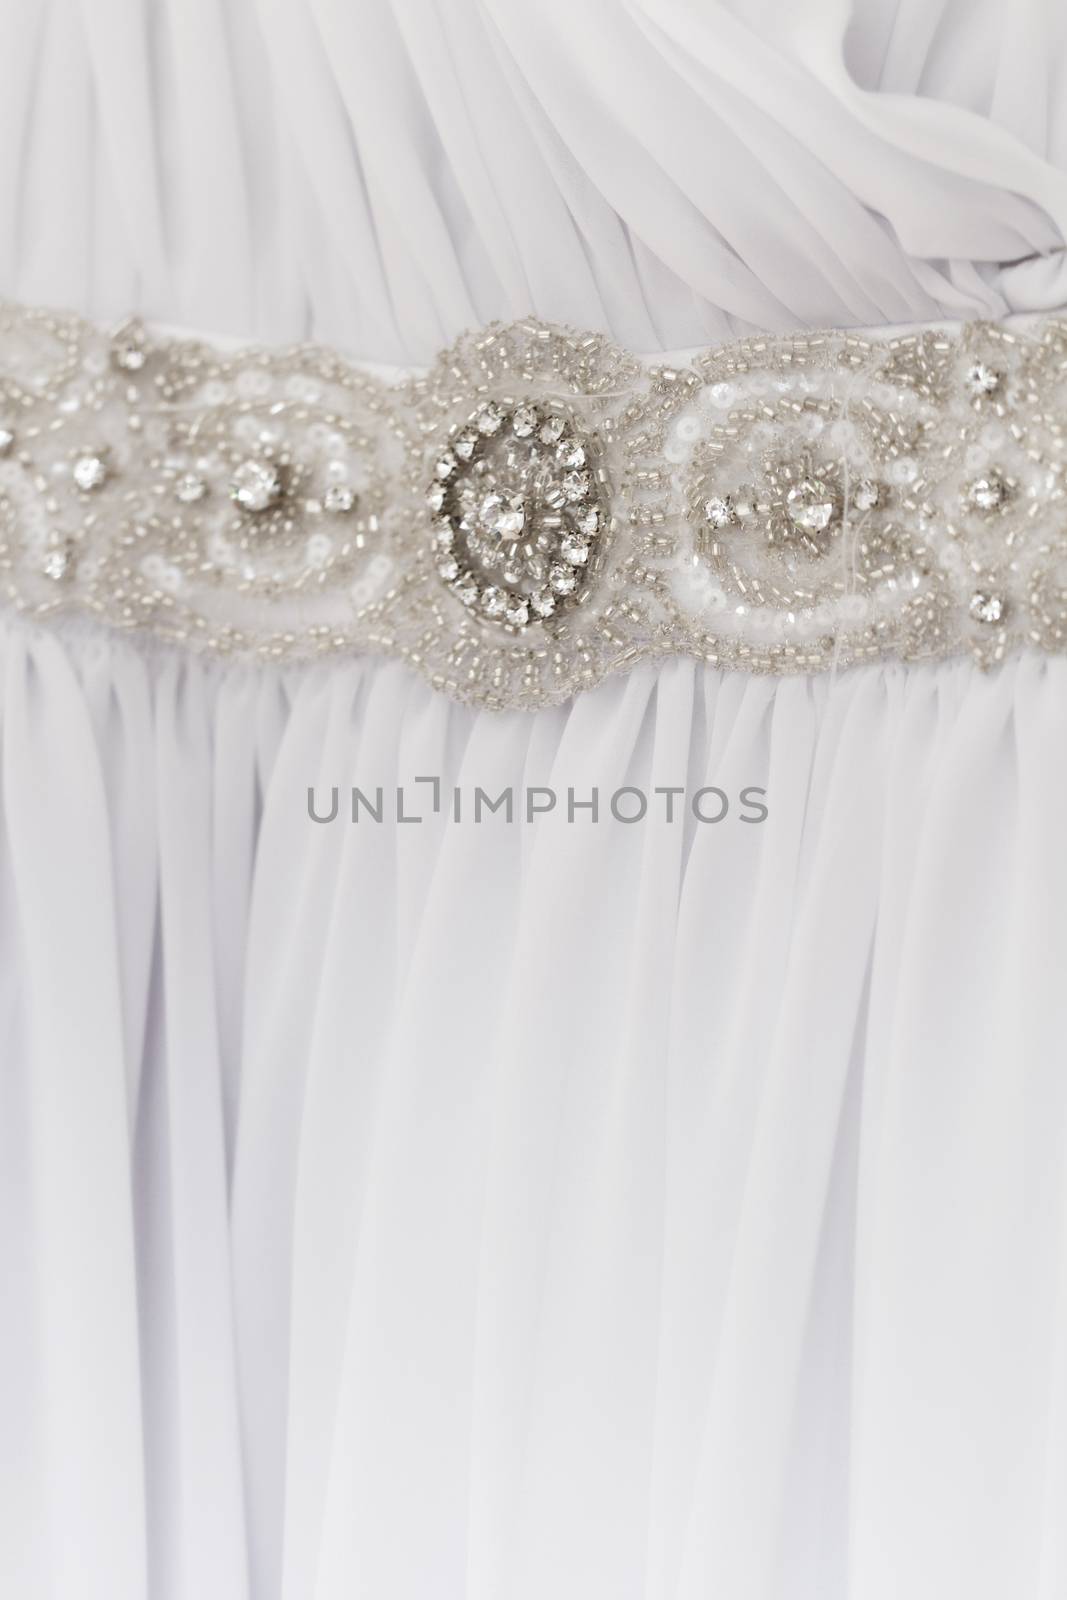 Photo of a wedding dress beaded belt